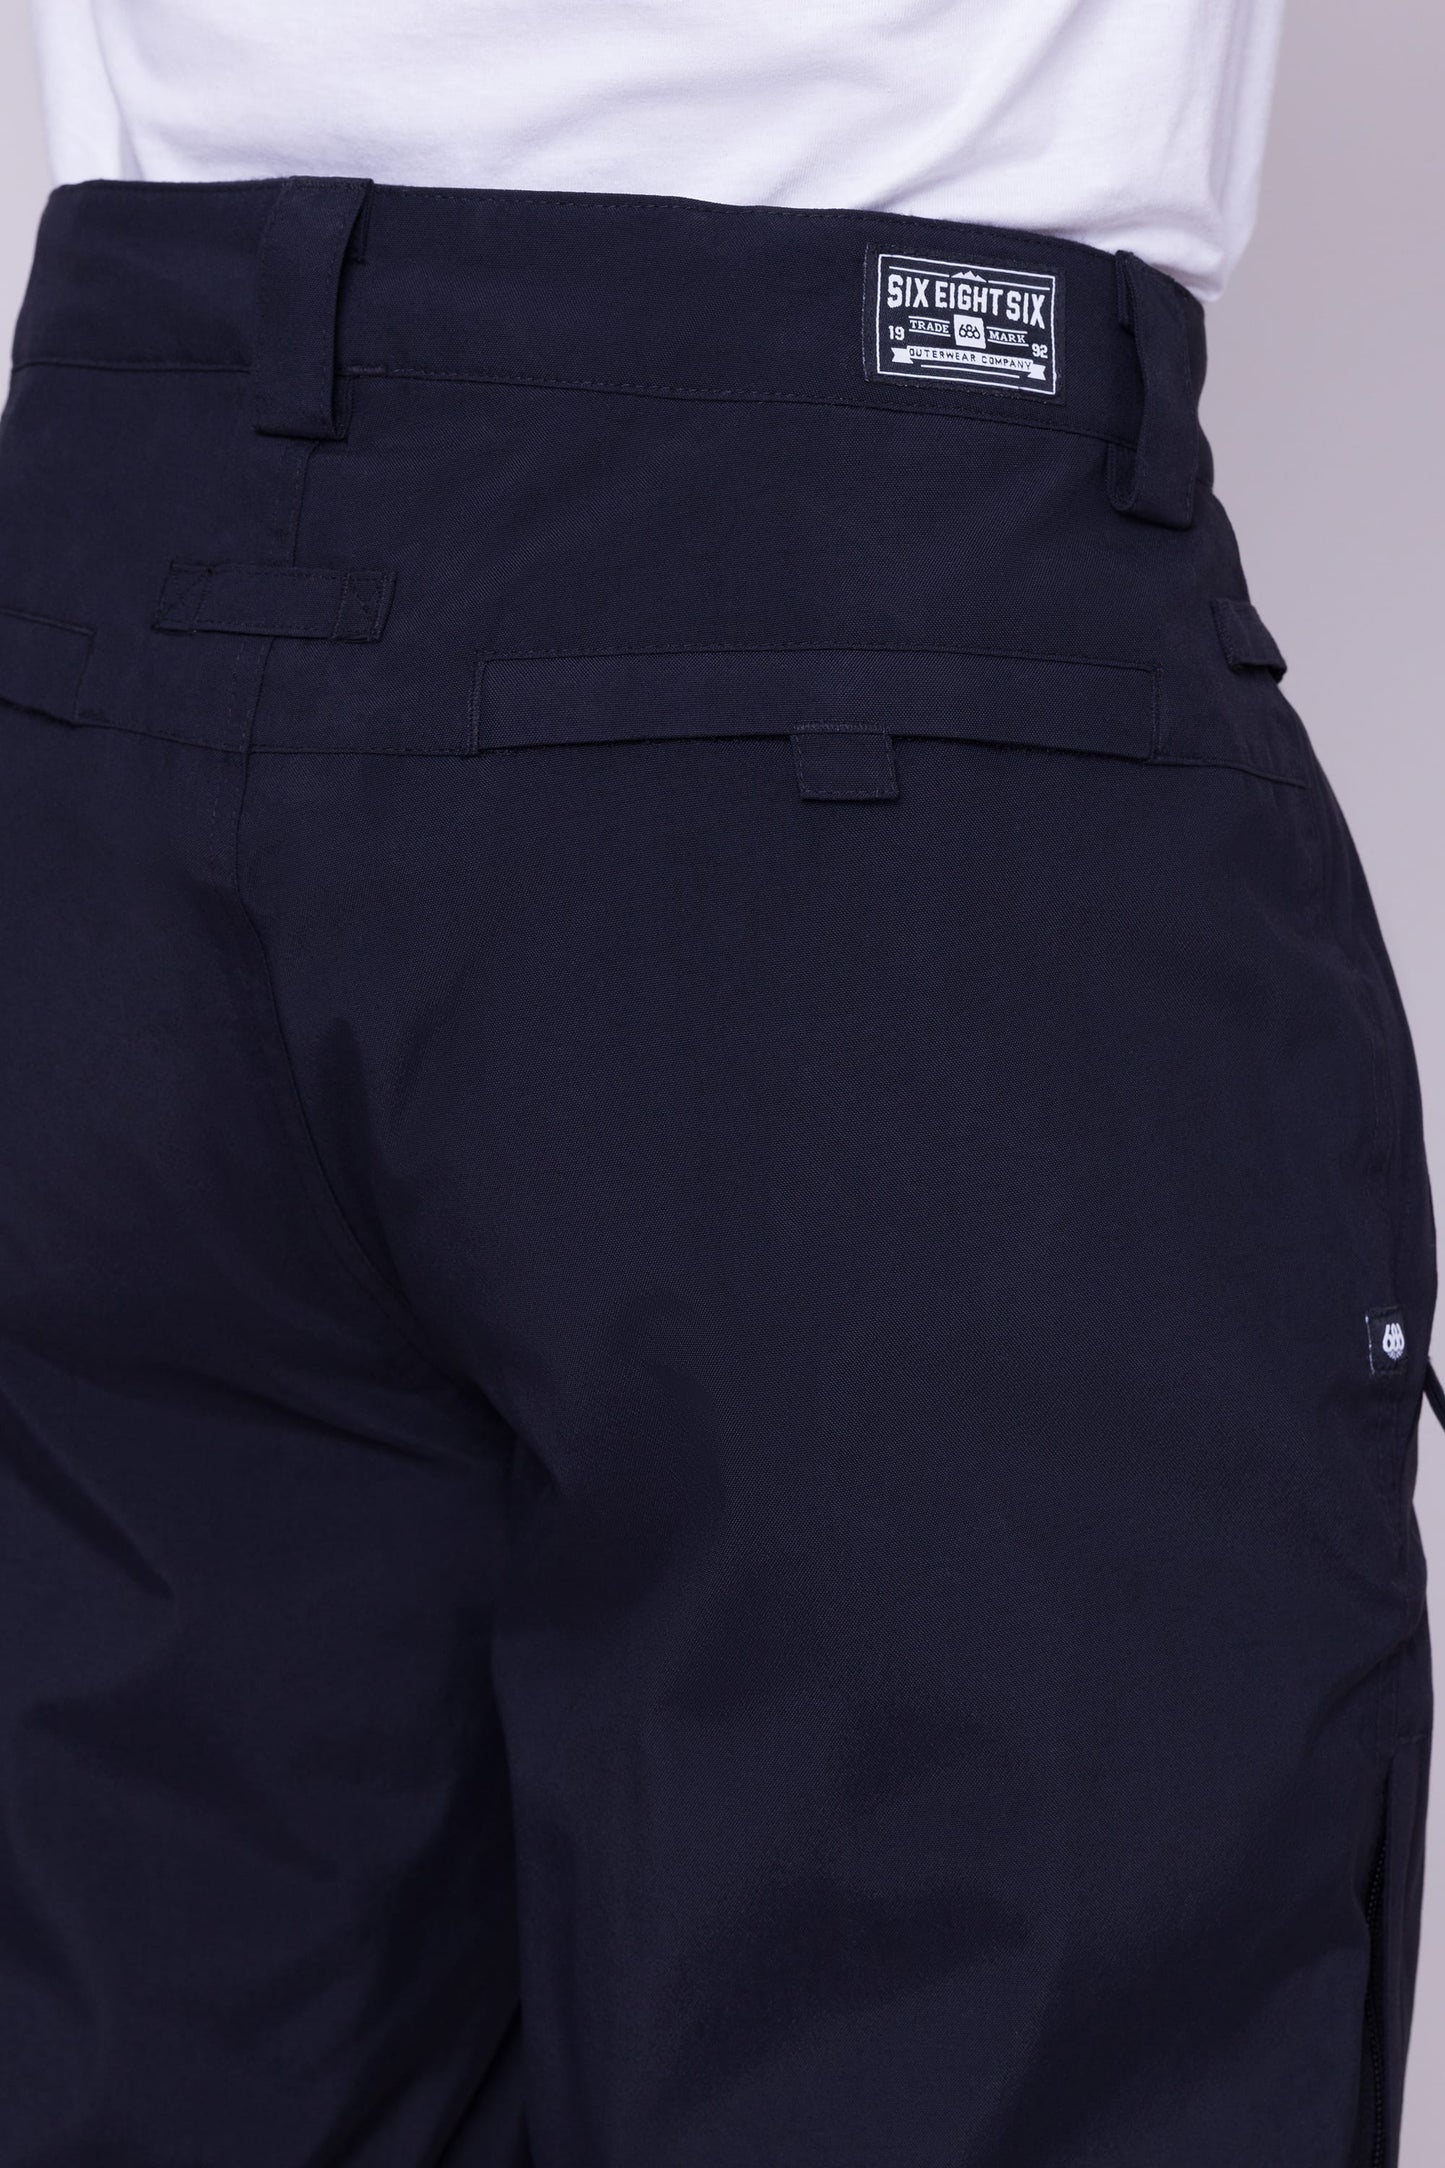 686 Men's Standard Shell Snow Pants 2024 - Black